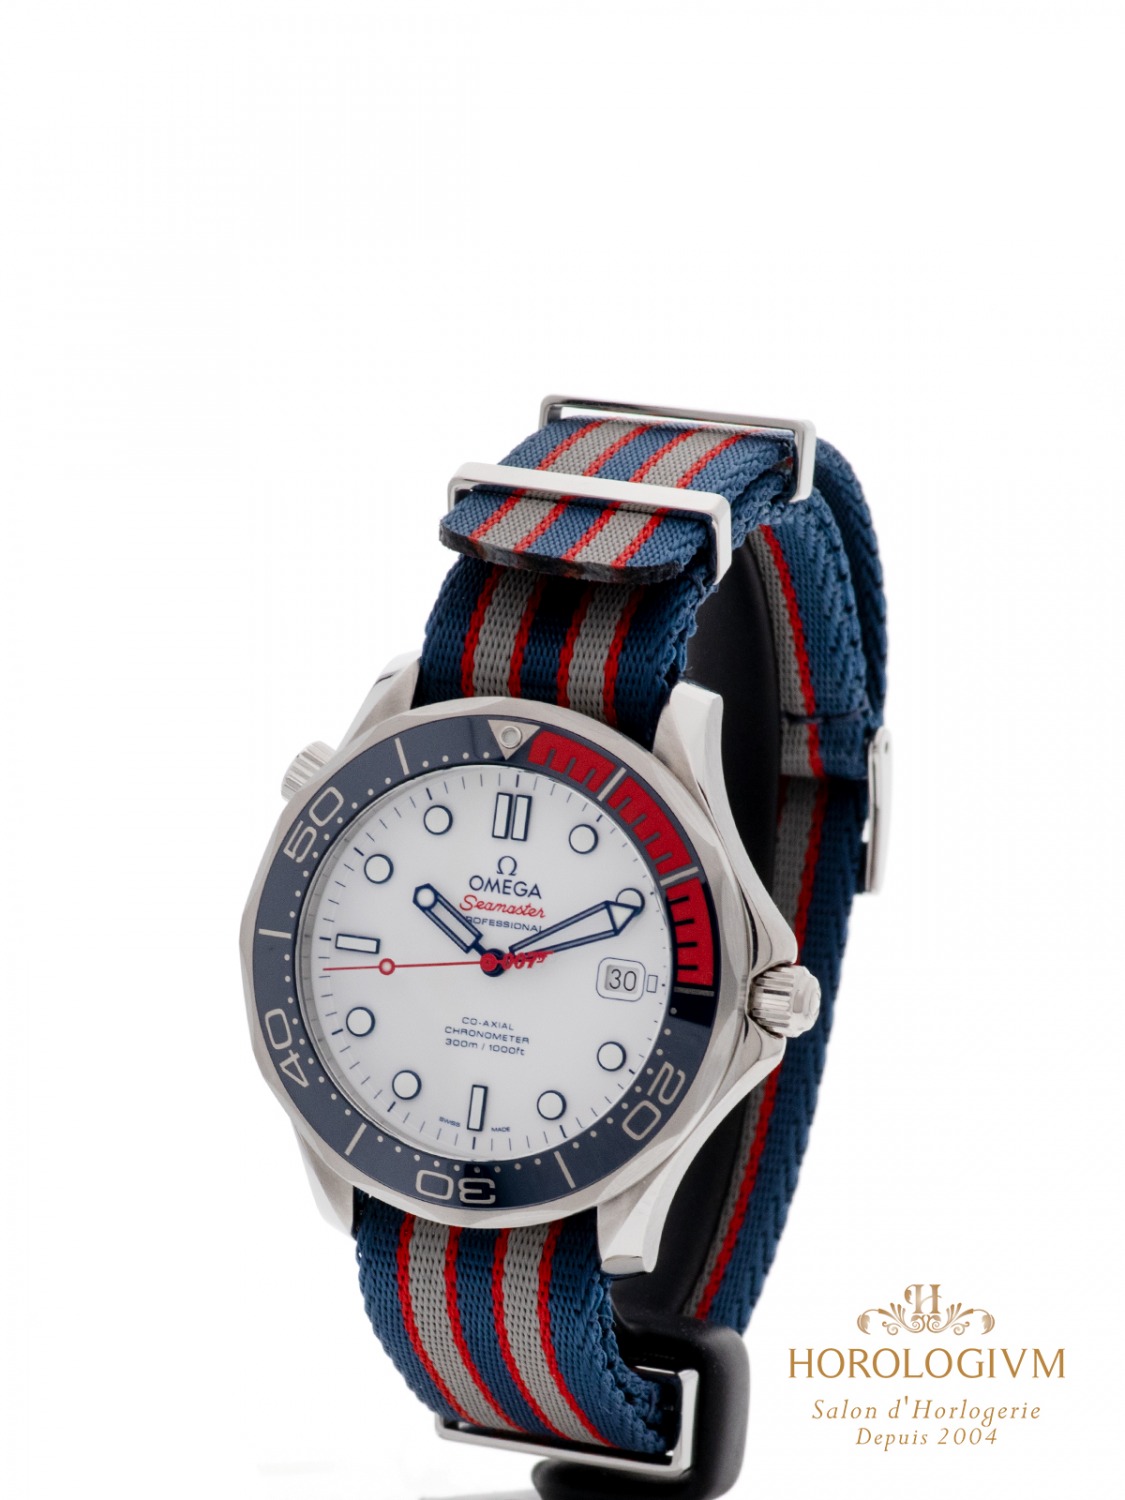 Omega Seamaster Diver 300m James Bond 007 Commander Edition REF. 21232412004001 watch, silver (case) and 1/4 red & 3/4 blue (bezel)